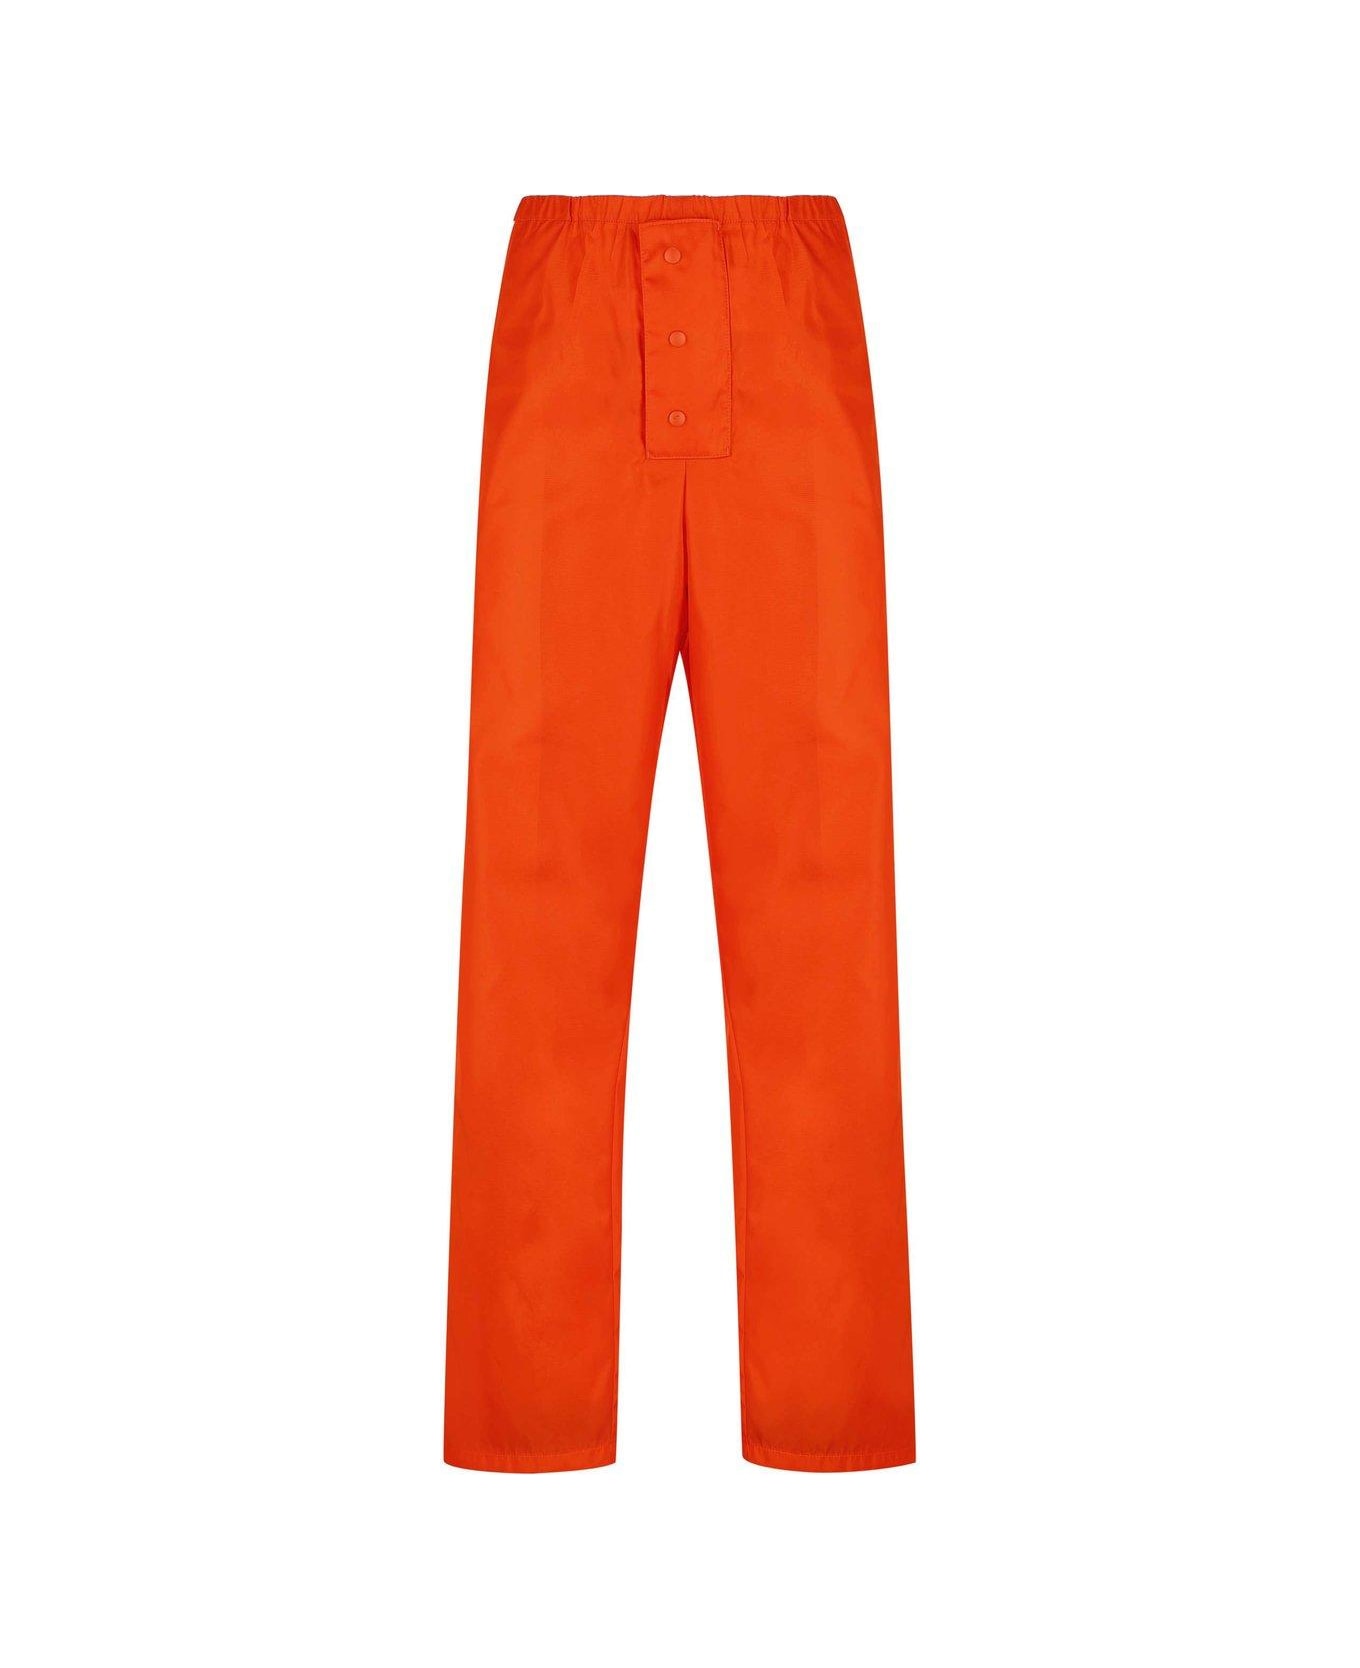 Prada High Waist Straight Leg Pants - Arancio